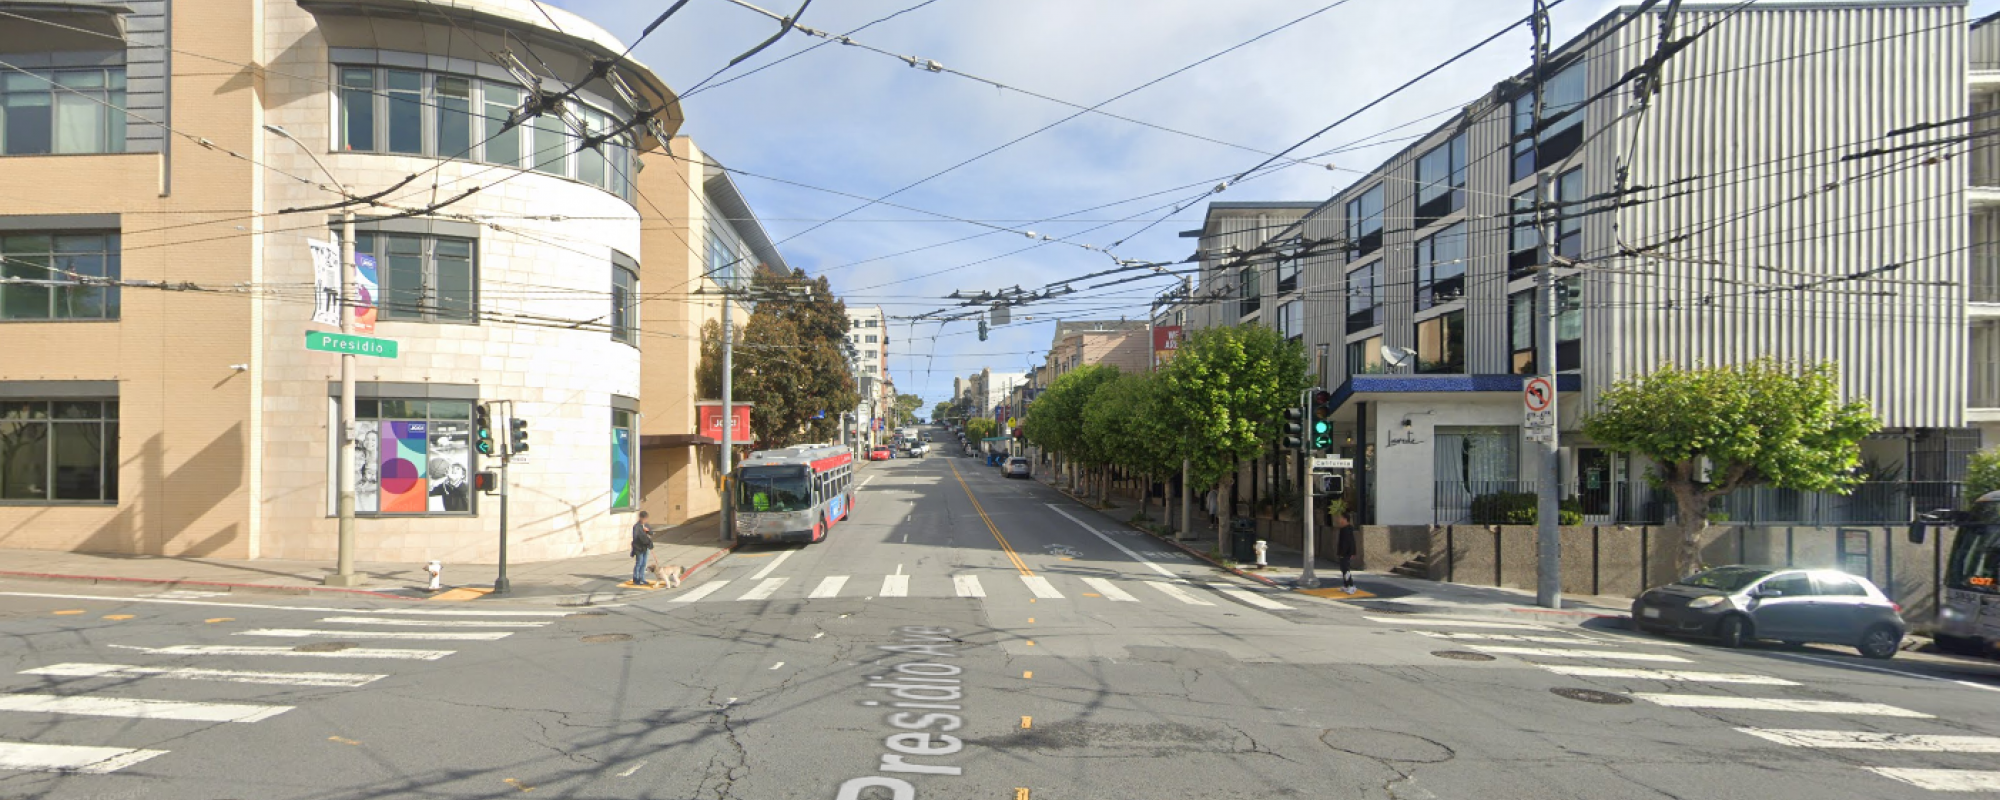 Street level view of presidio and california